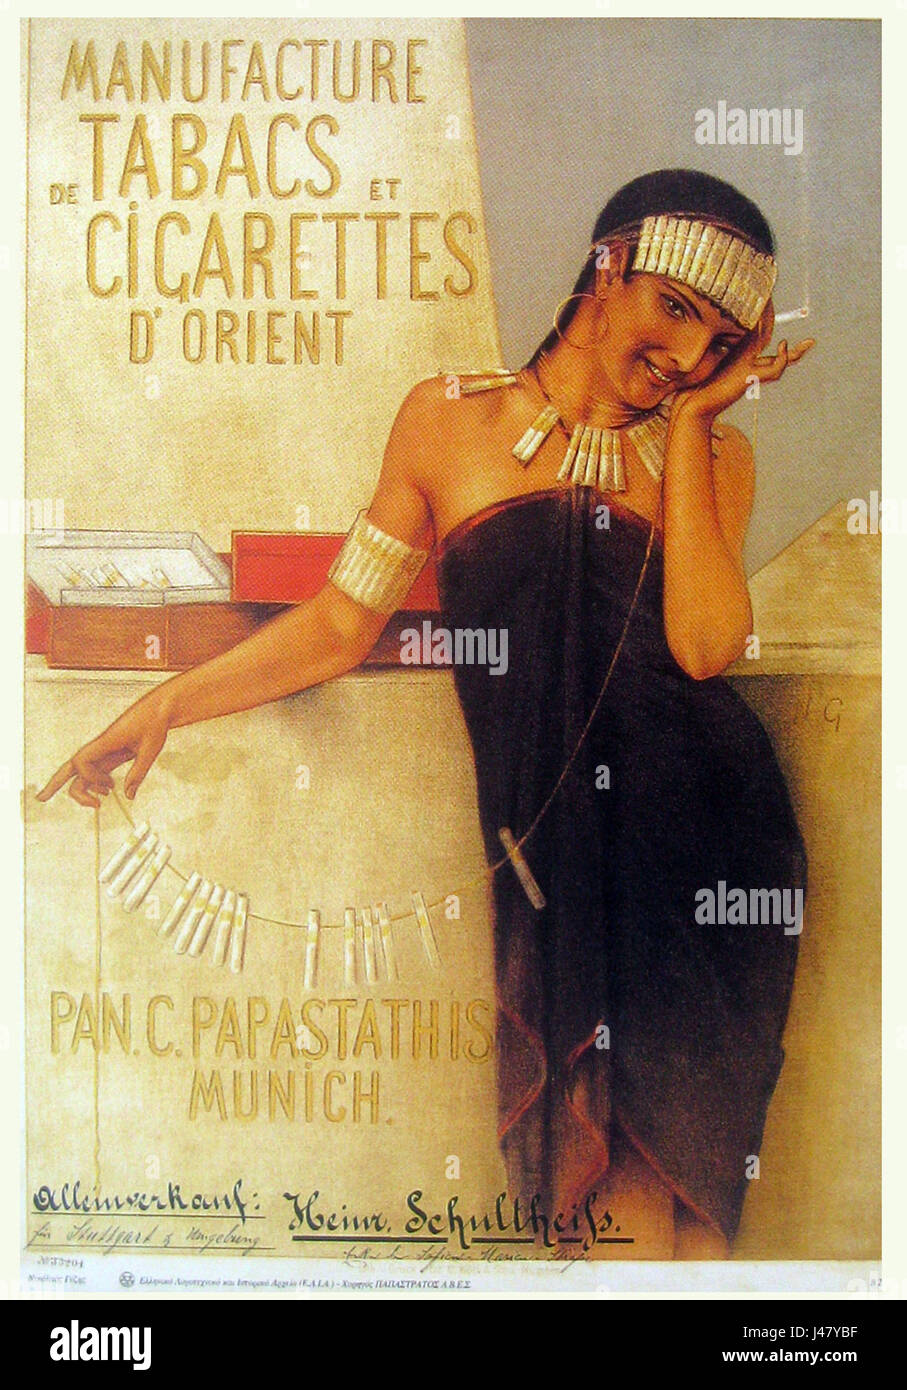 Papastathis sigarette Monaco di Baviera Foto Stock